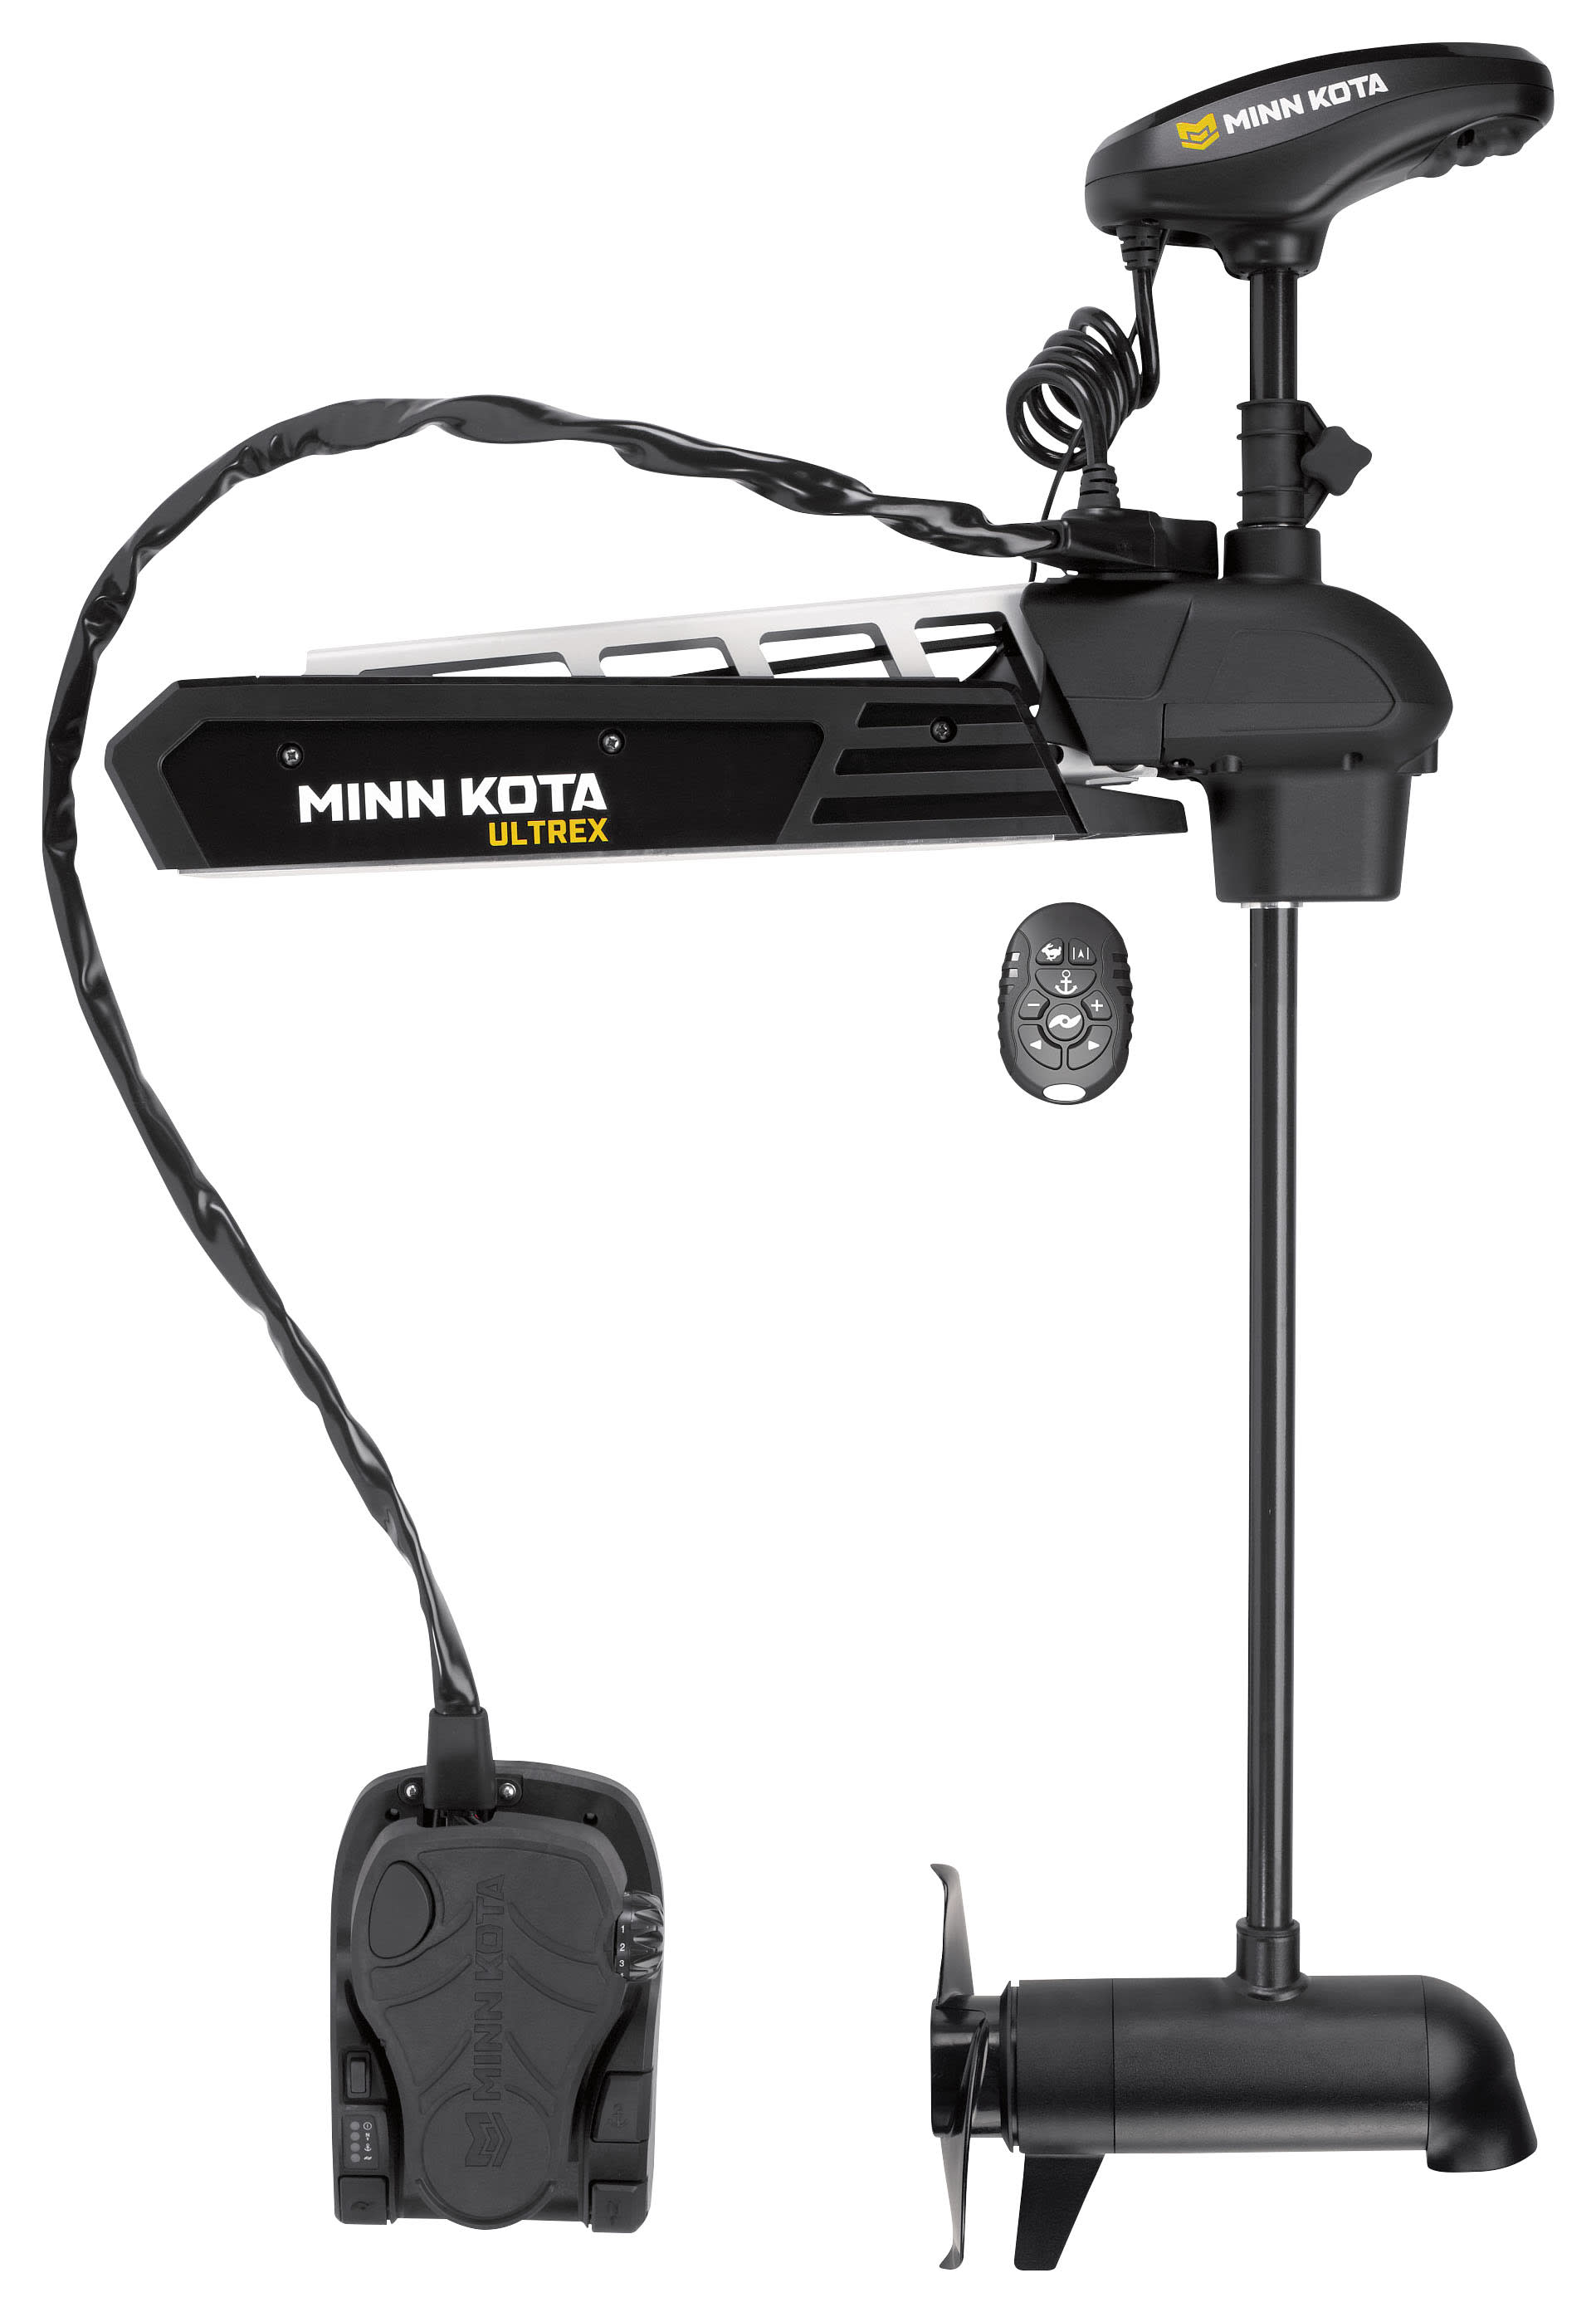 Minn Kota® Ultrex® 112lb 52" Freshwater Trolling Motor with Dual Spectrum CHIRP Sonar and Micro Remote